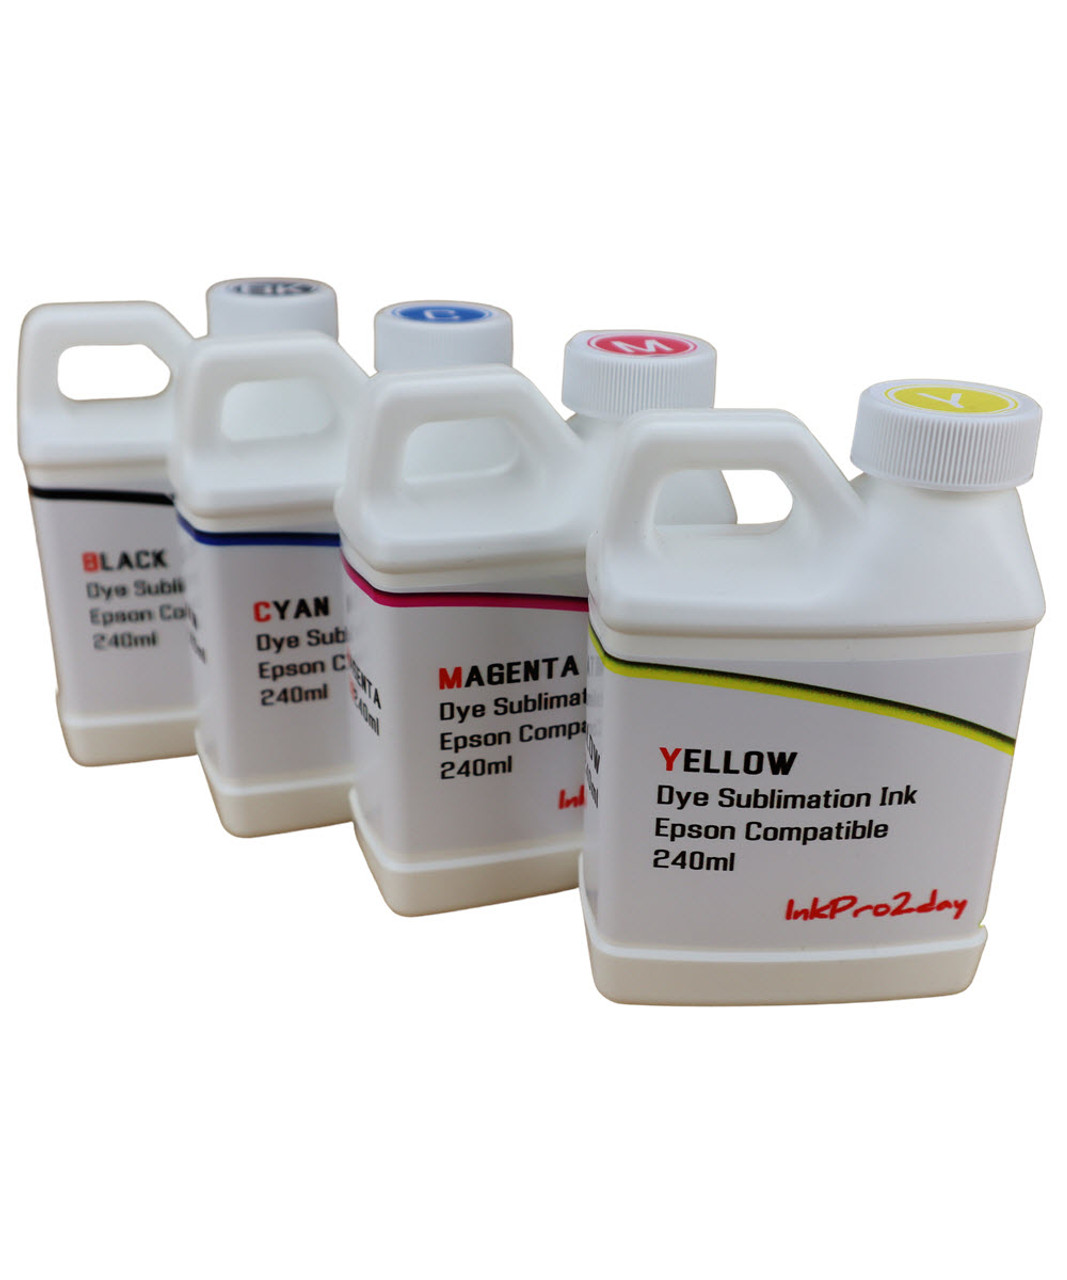 4- 240ml bottles Dye Sublimation Ink for Epson WorkForce WF-7210, WorkForce WF-7710, WorkForce WF-7720 Printers